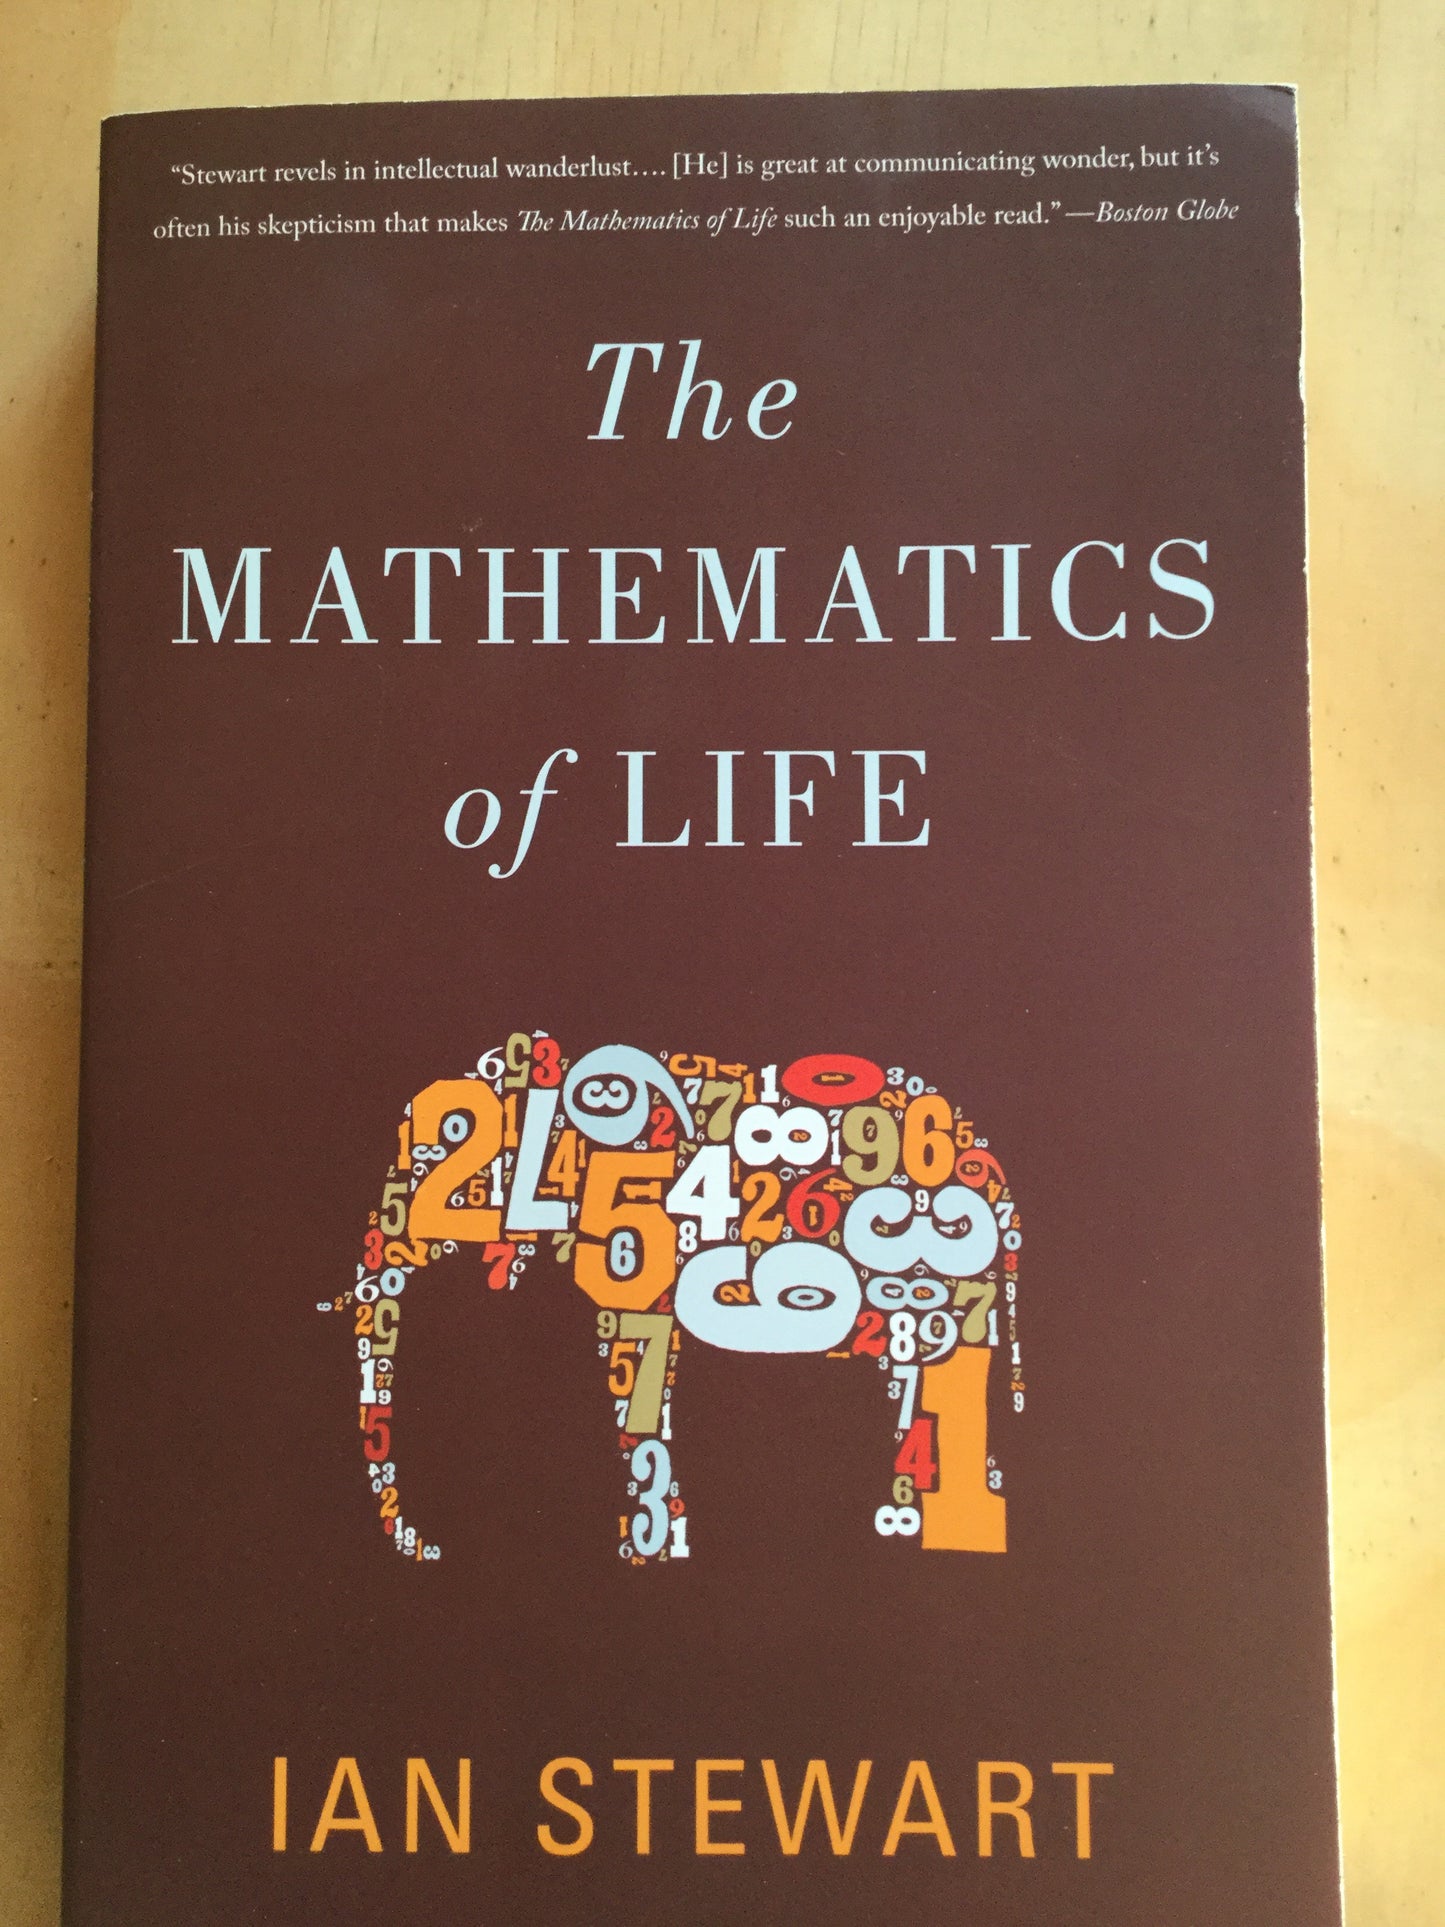 The Mathematics of Life